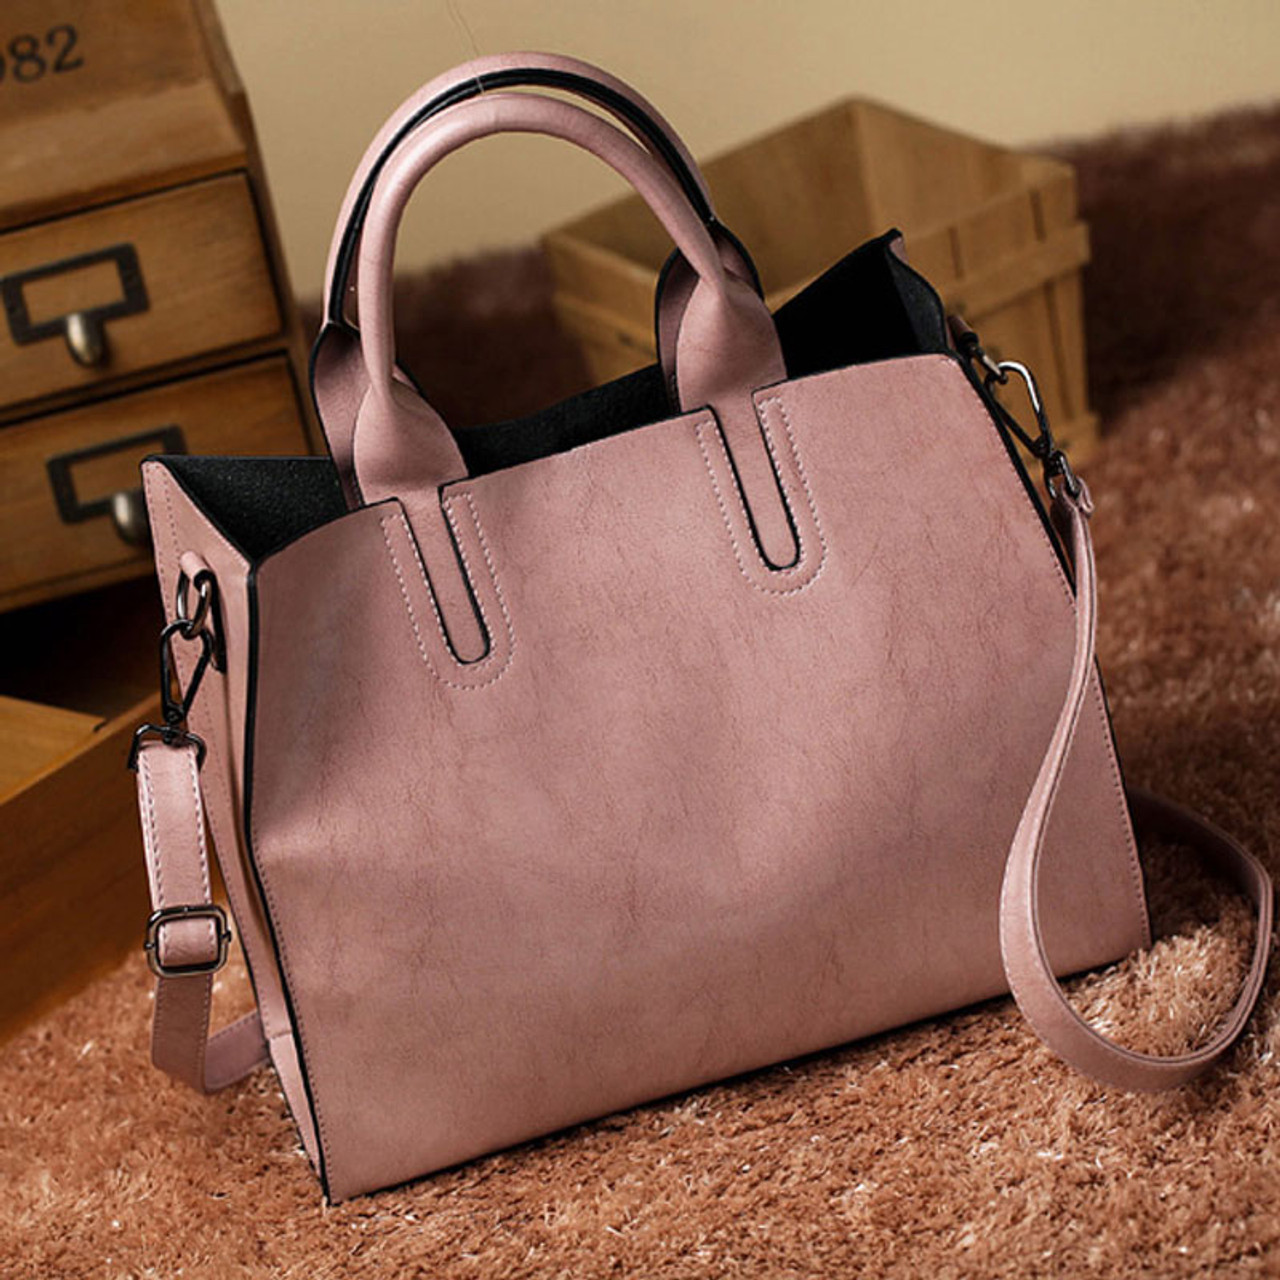 Leather Bags Handbags Women Famous Brands Big Casual Women Bags Trunk Tote Spanish Brand Shoulder Bag 31305.1544174916